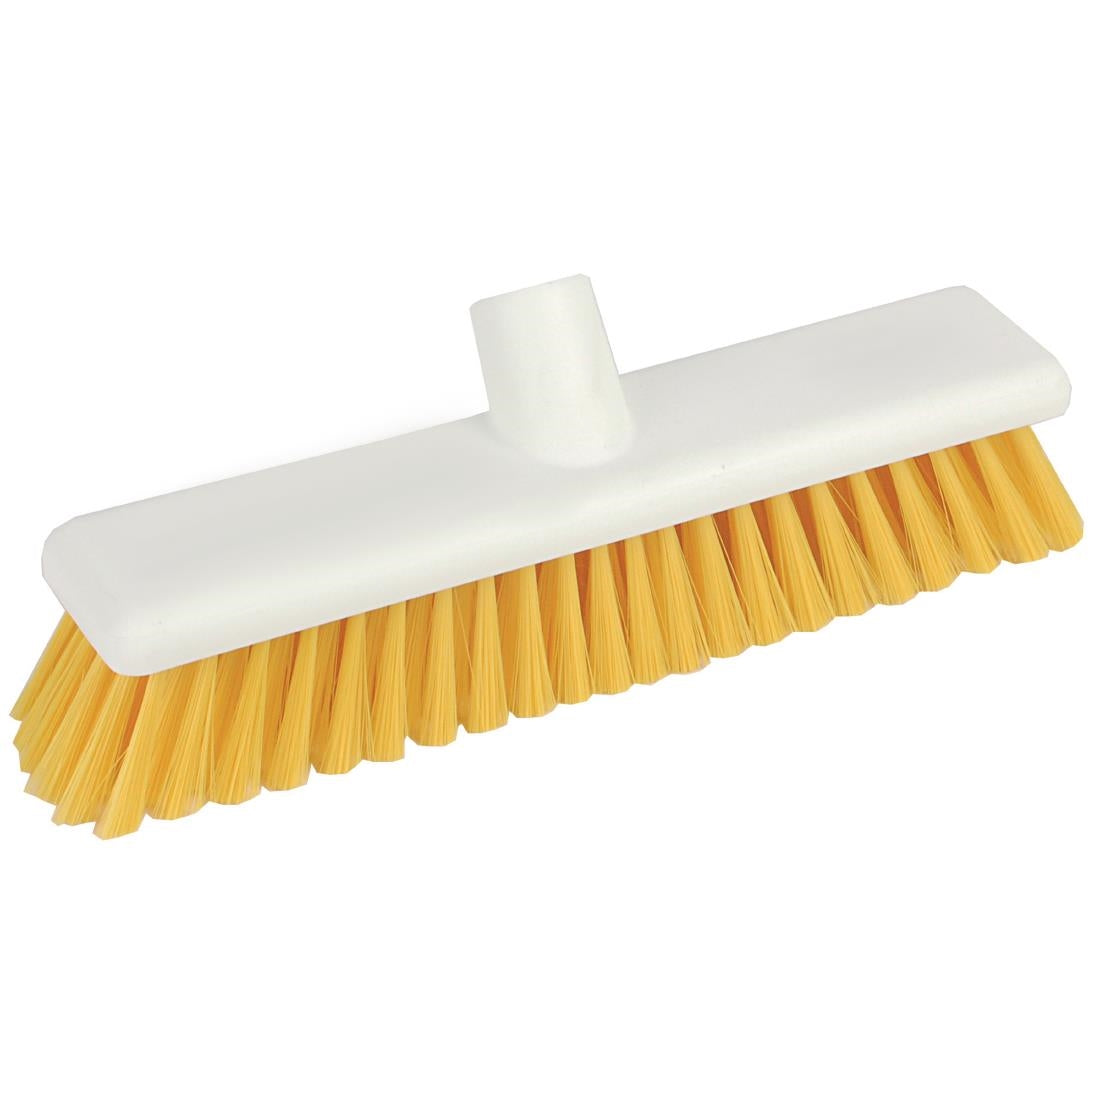 DN831 Jantex Hygiene Broom Soft Bristle Yellow 12in JD Catering Equipment Solutions Ltd